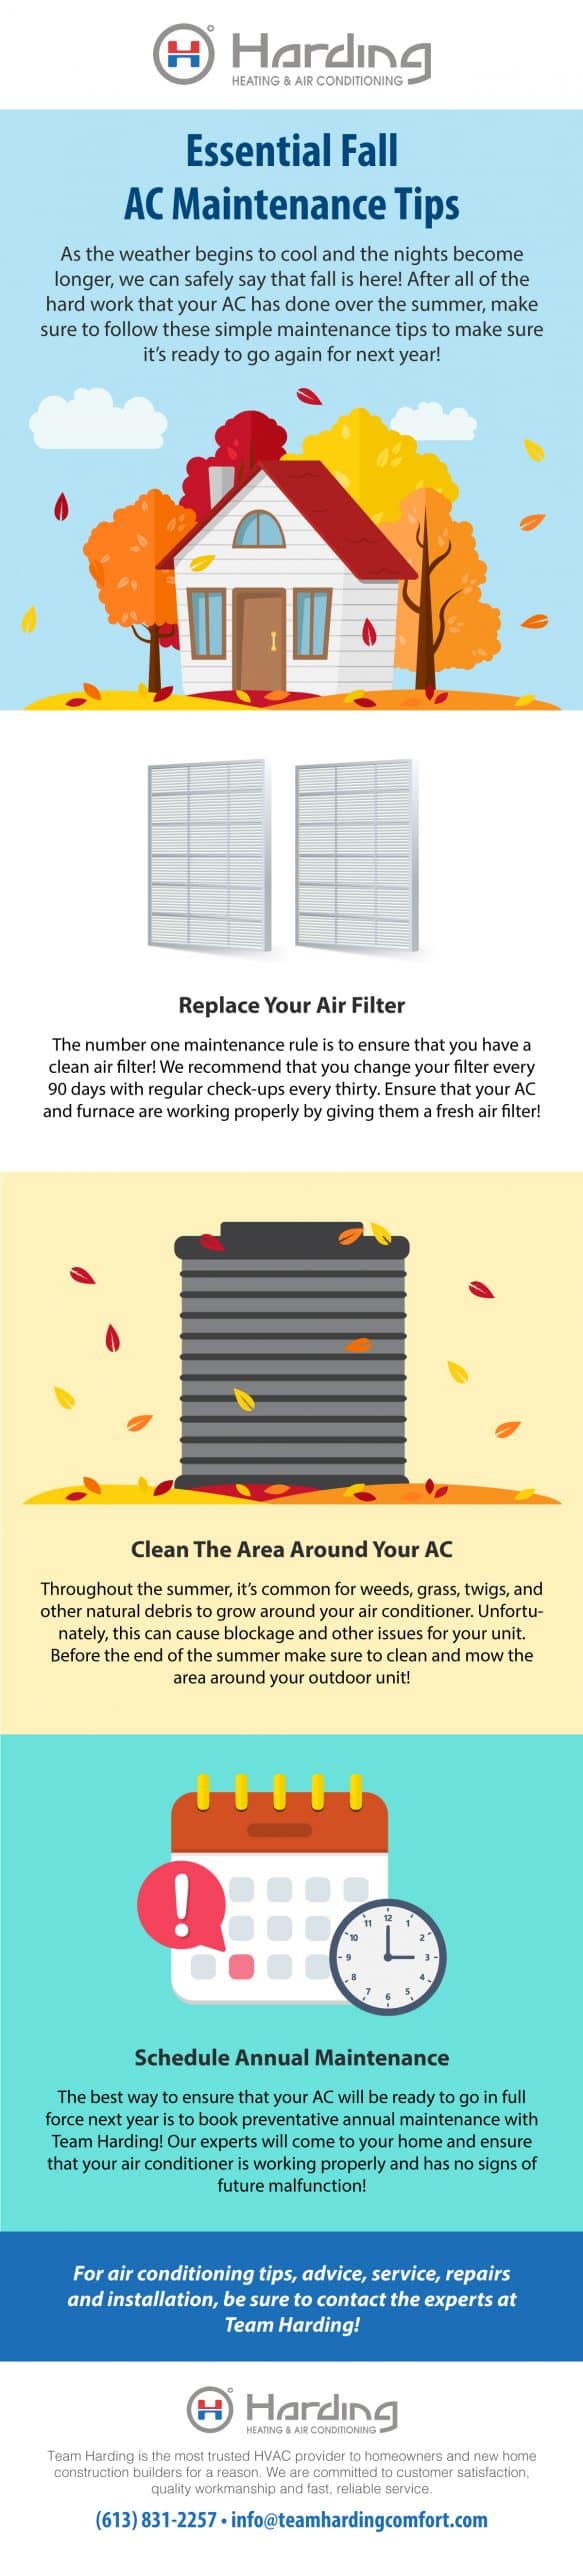 Essential Fall AC Maintenance Tips